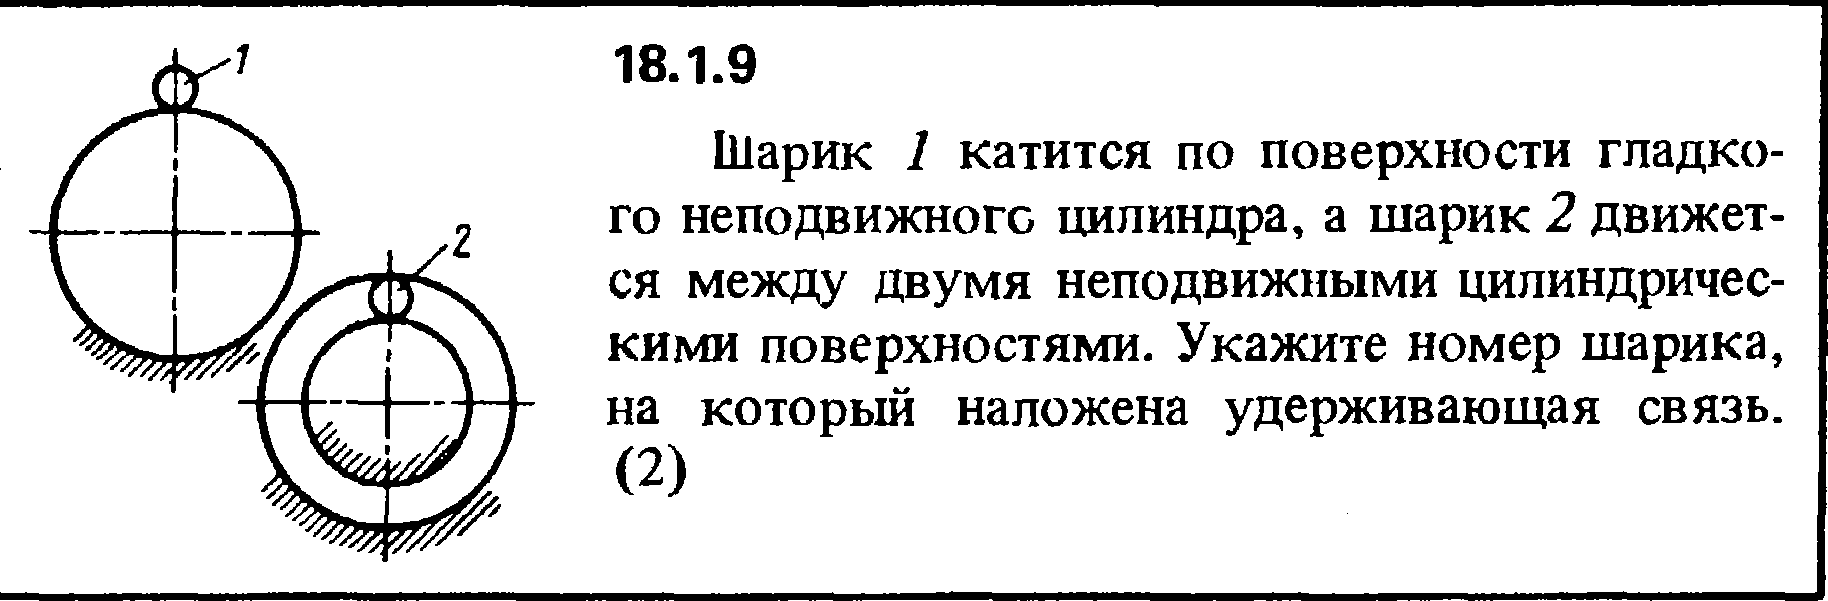 Решение 18.1.9 из сборника (решебника) Кепе О.Е. 1989 г